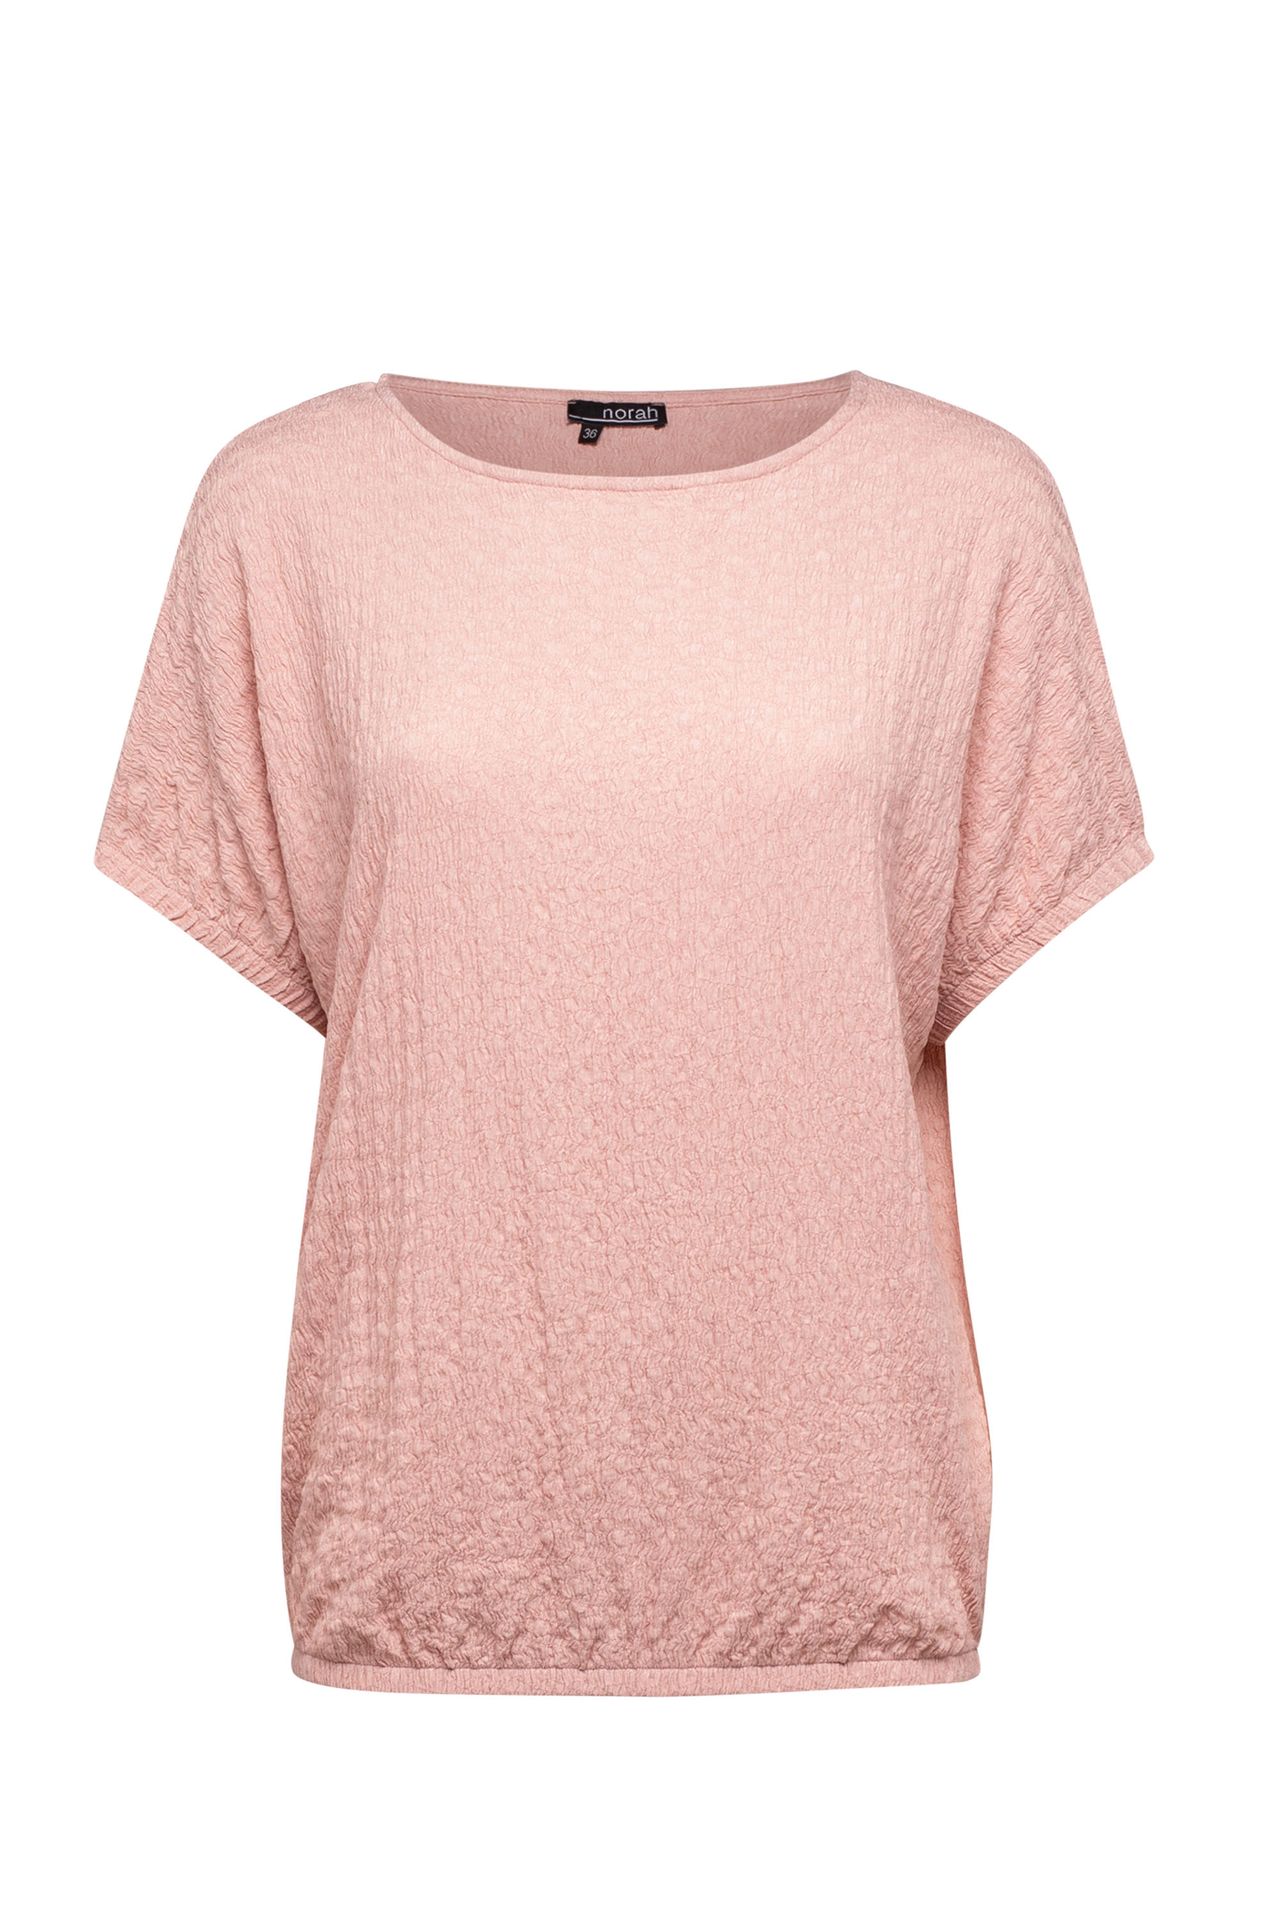  Shirt roze rose 212894-907